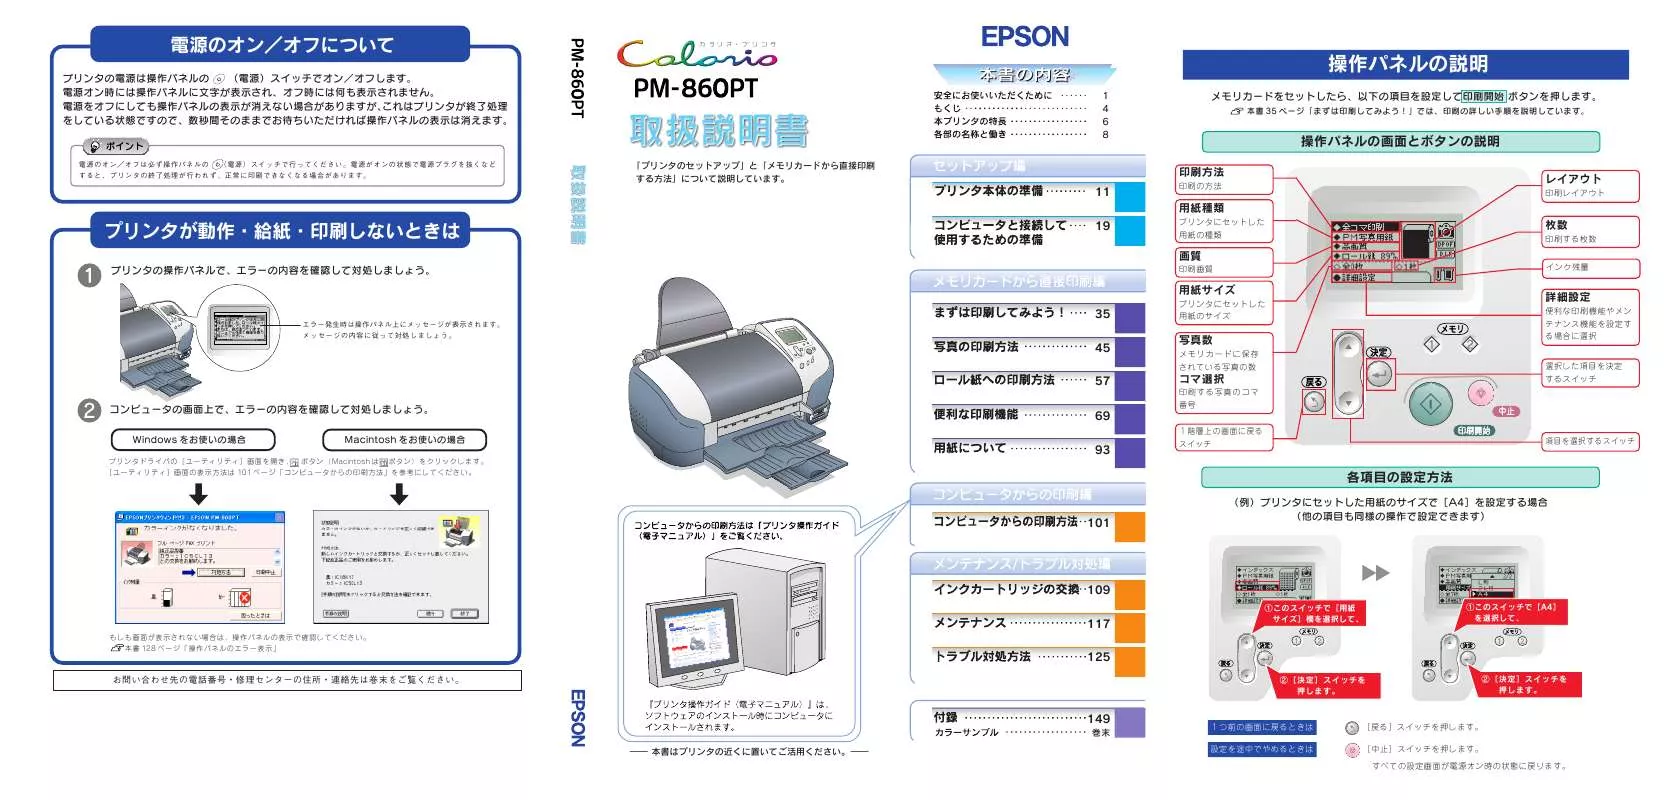 Mode d'emploi EPSON PM-860PT